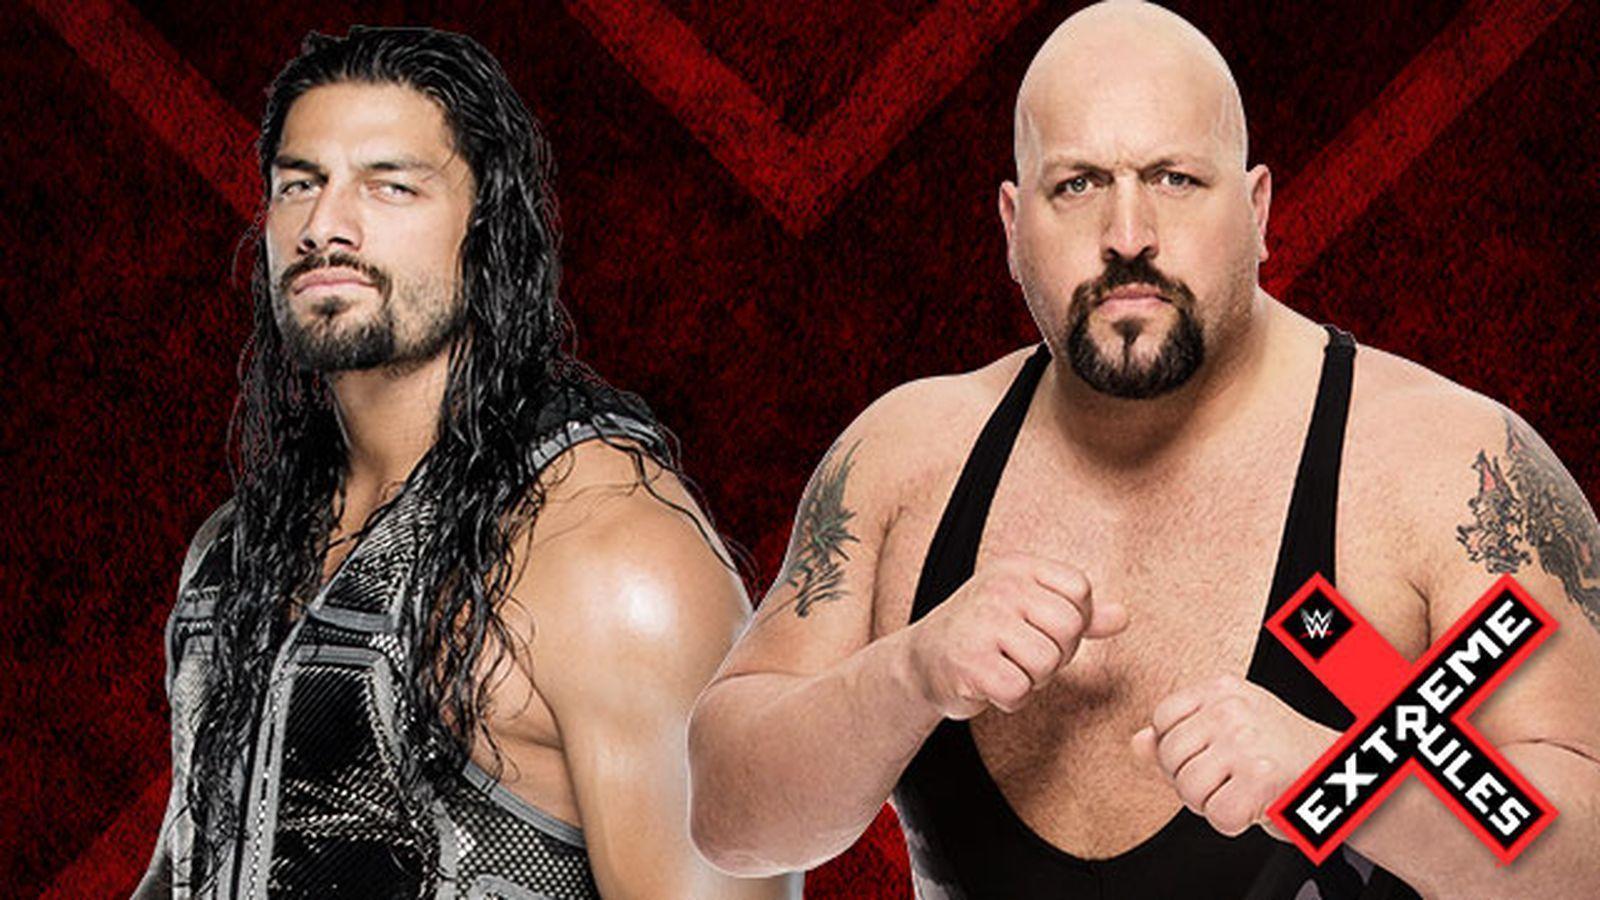 Roman Reigns & Big Show HD Wallpaper. WWE HD WALLPAPERS